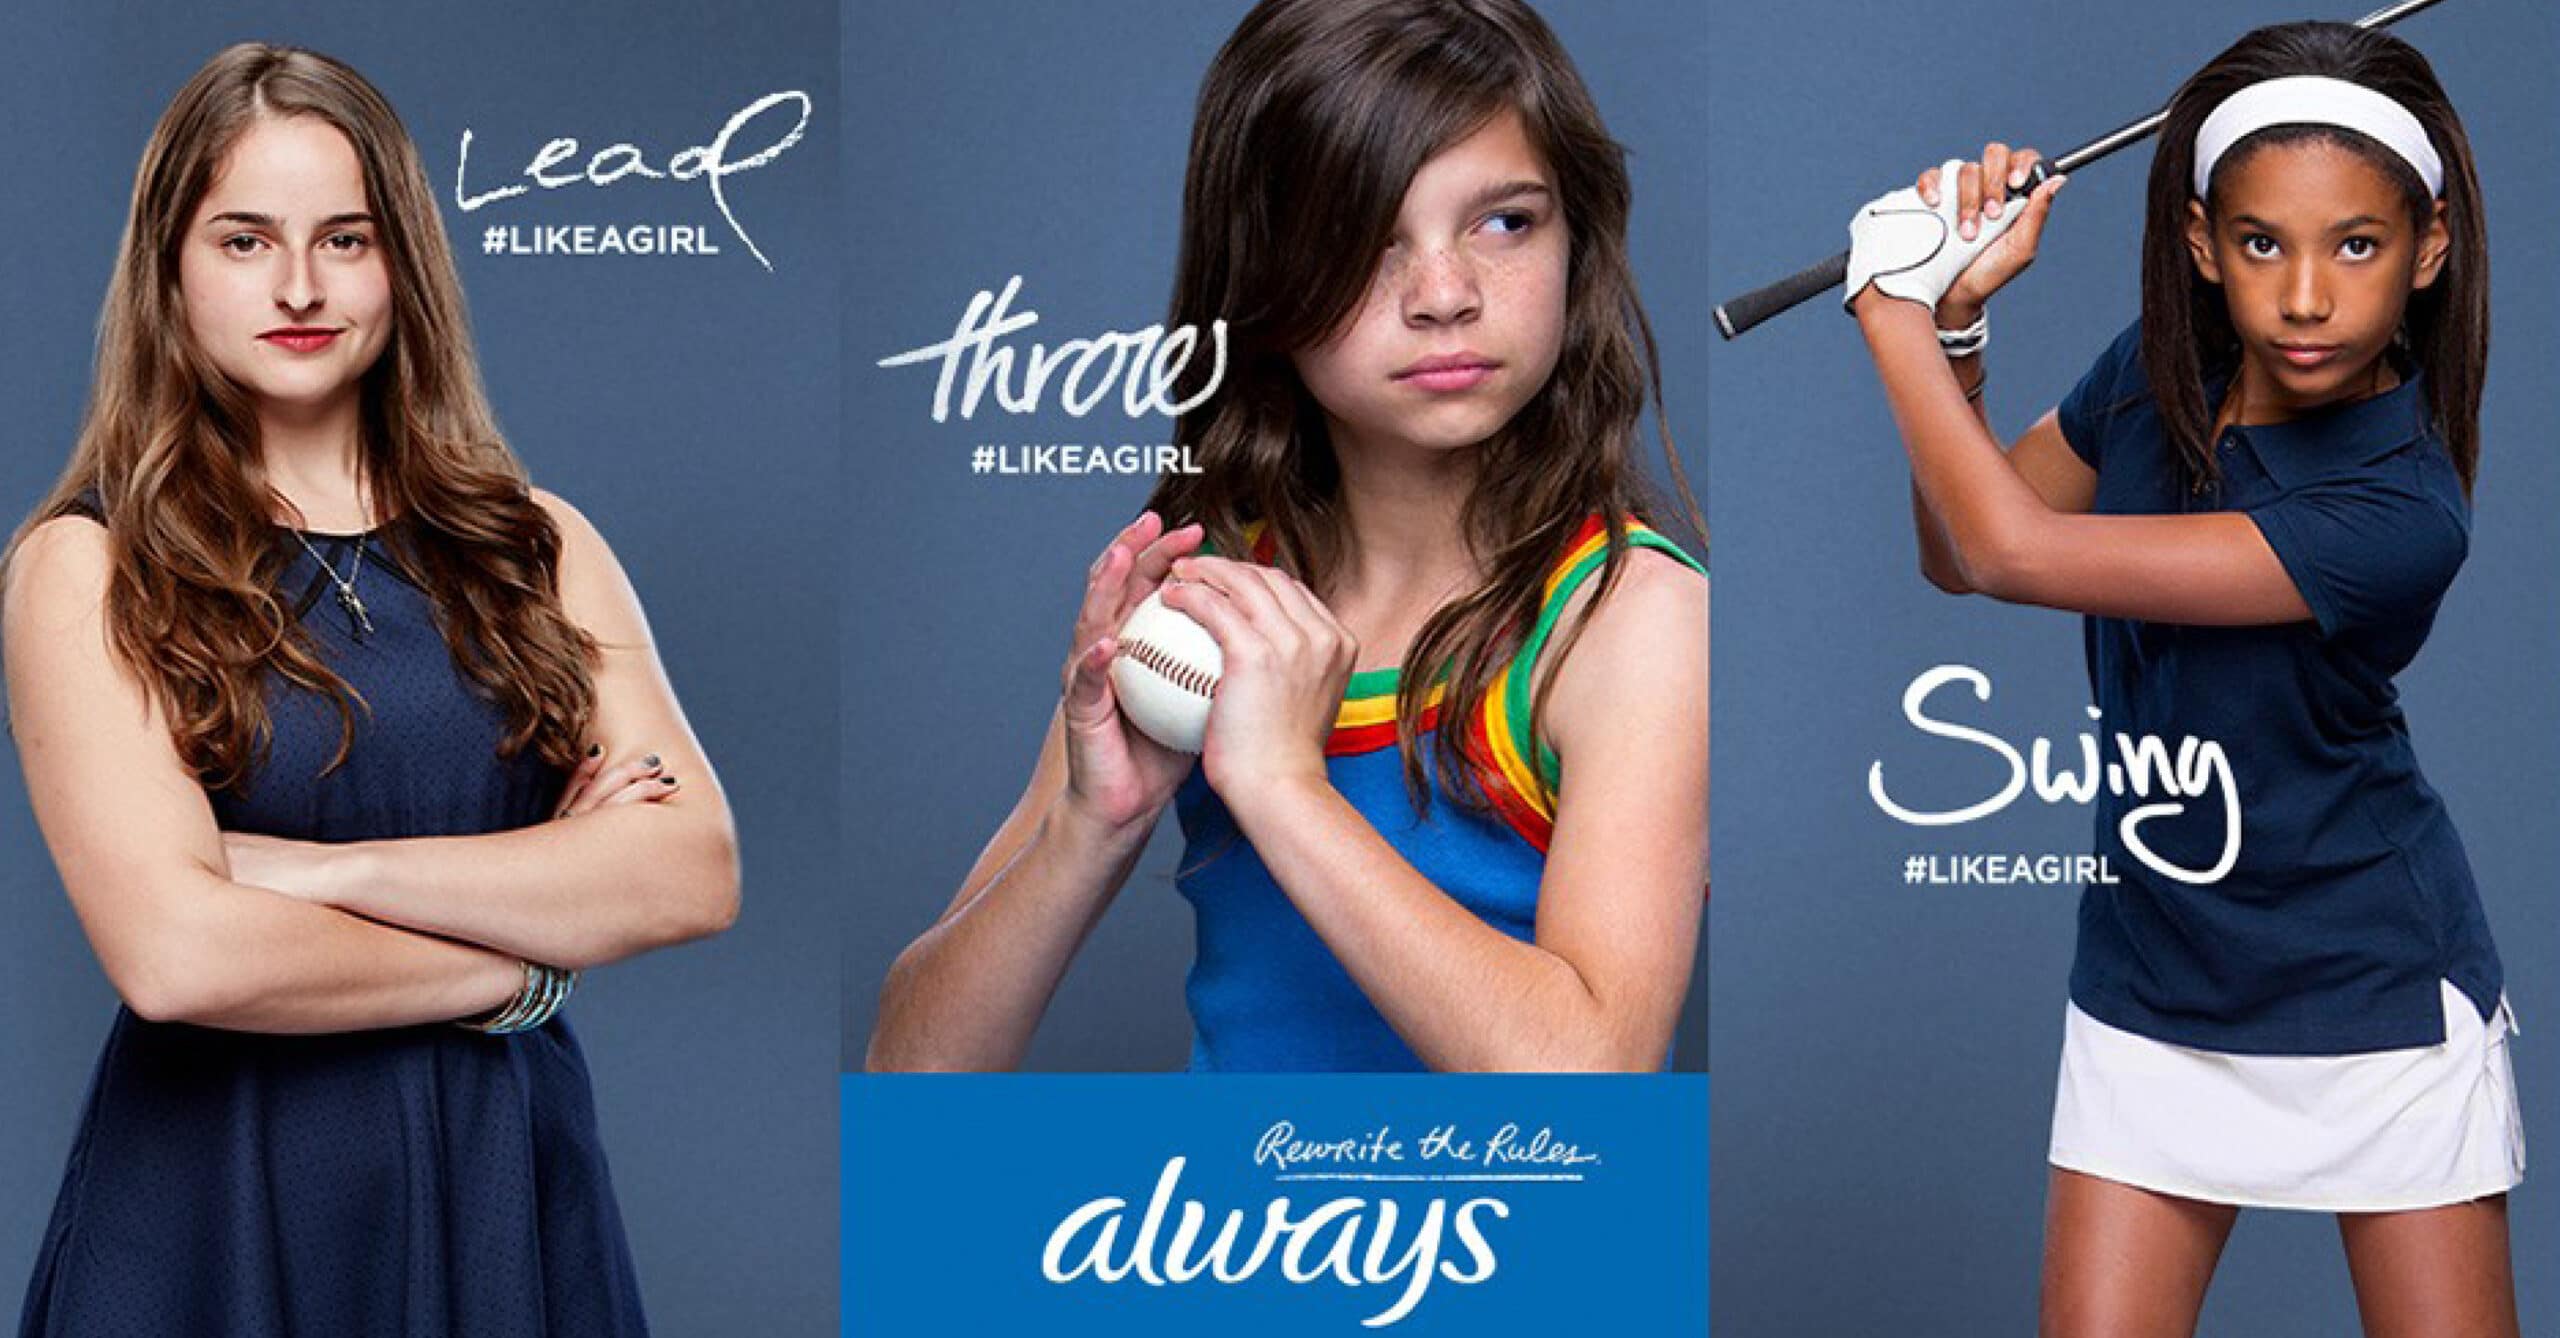 Always teen. Реклама Олвейс. Always реклама. Реклама always like a girl. Always #LIKEAGIRL.